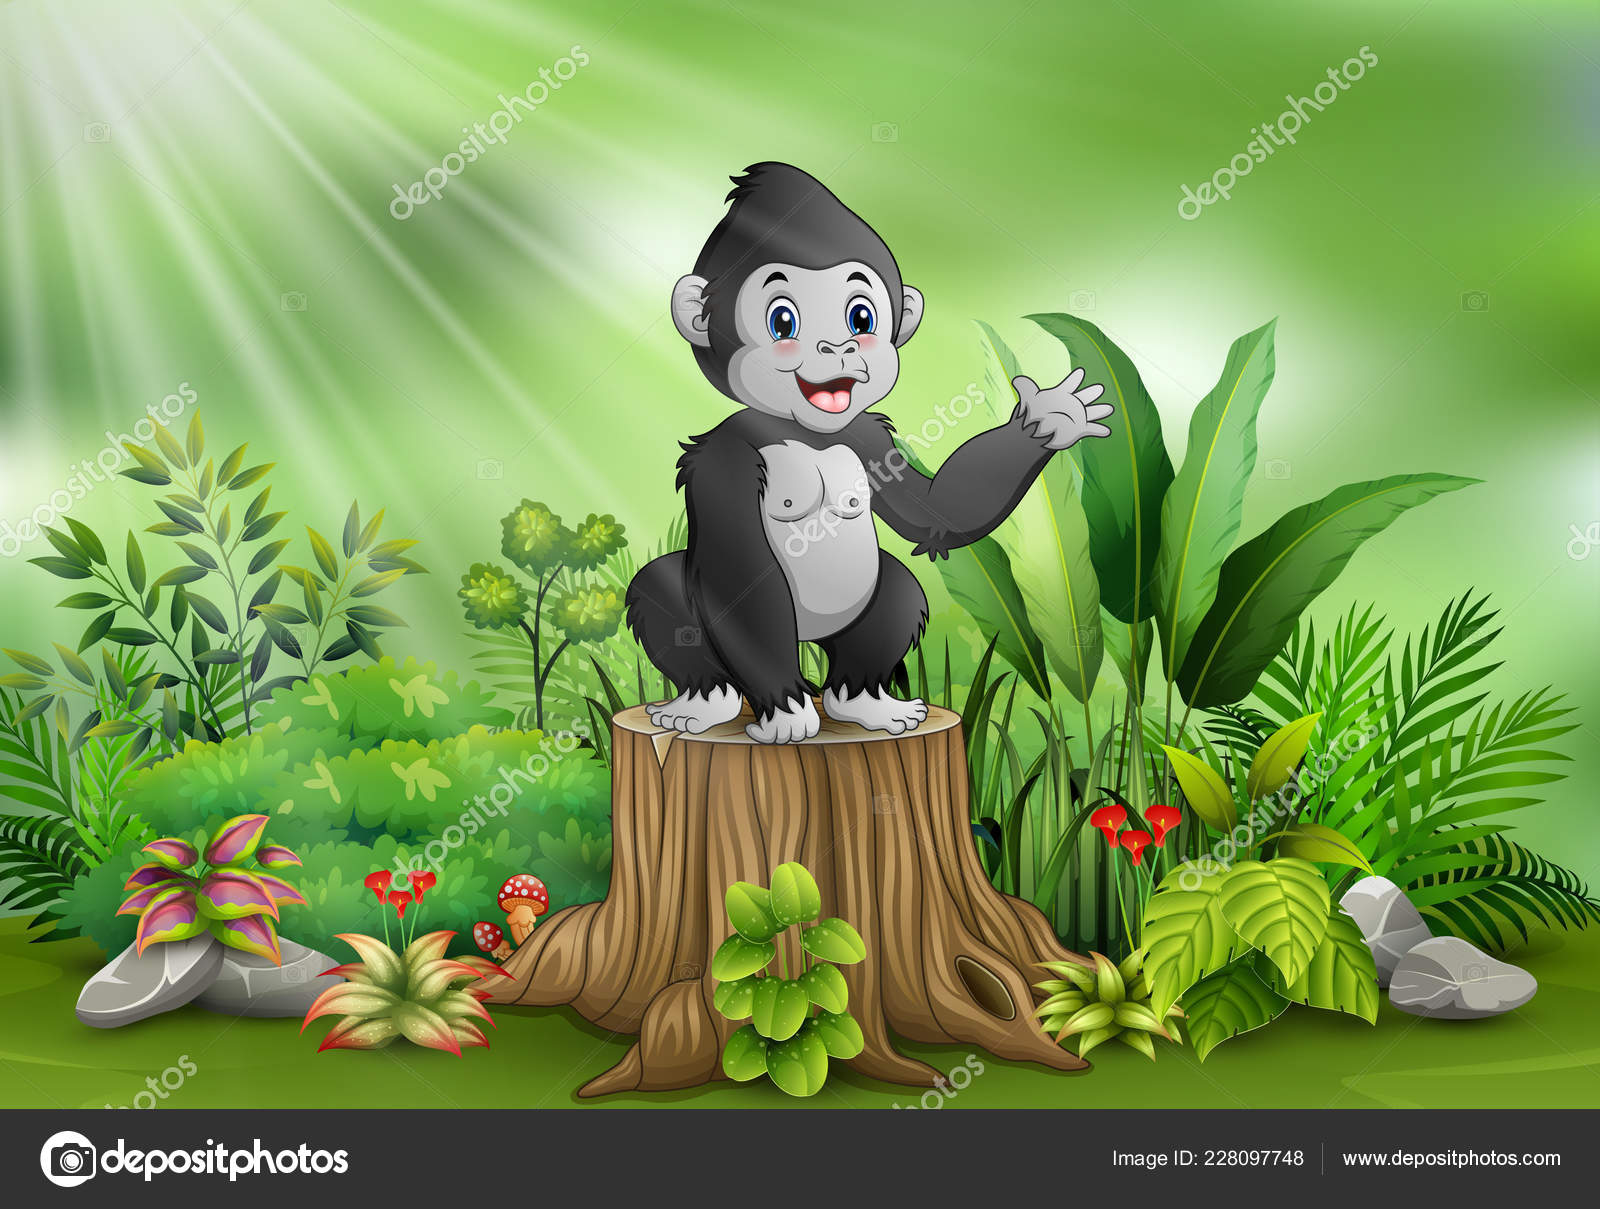 Cartoon baby gorilla Vector Art Stock Images | Depositphotos